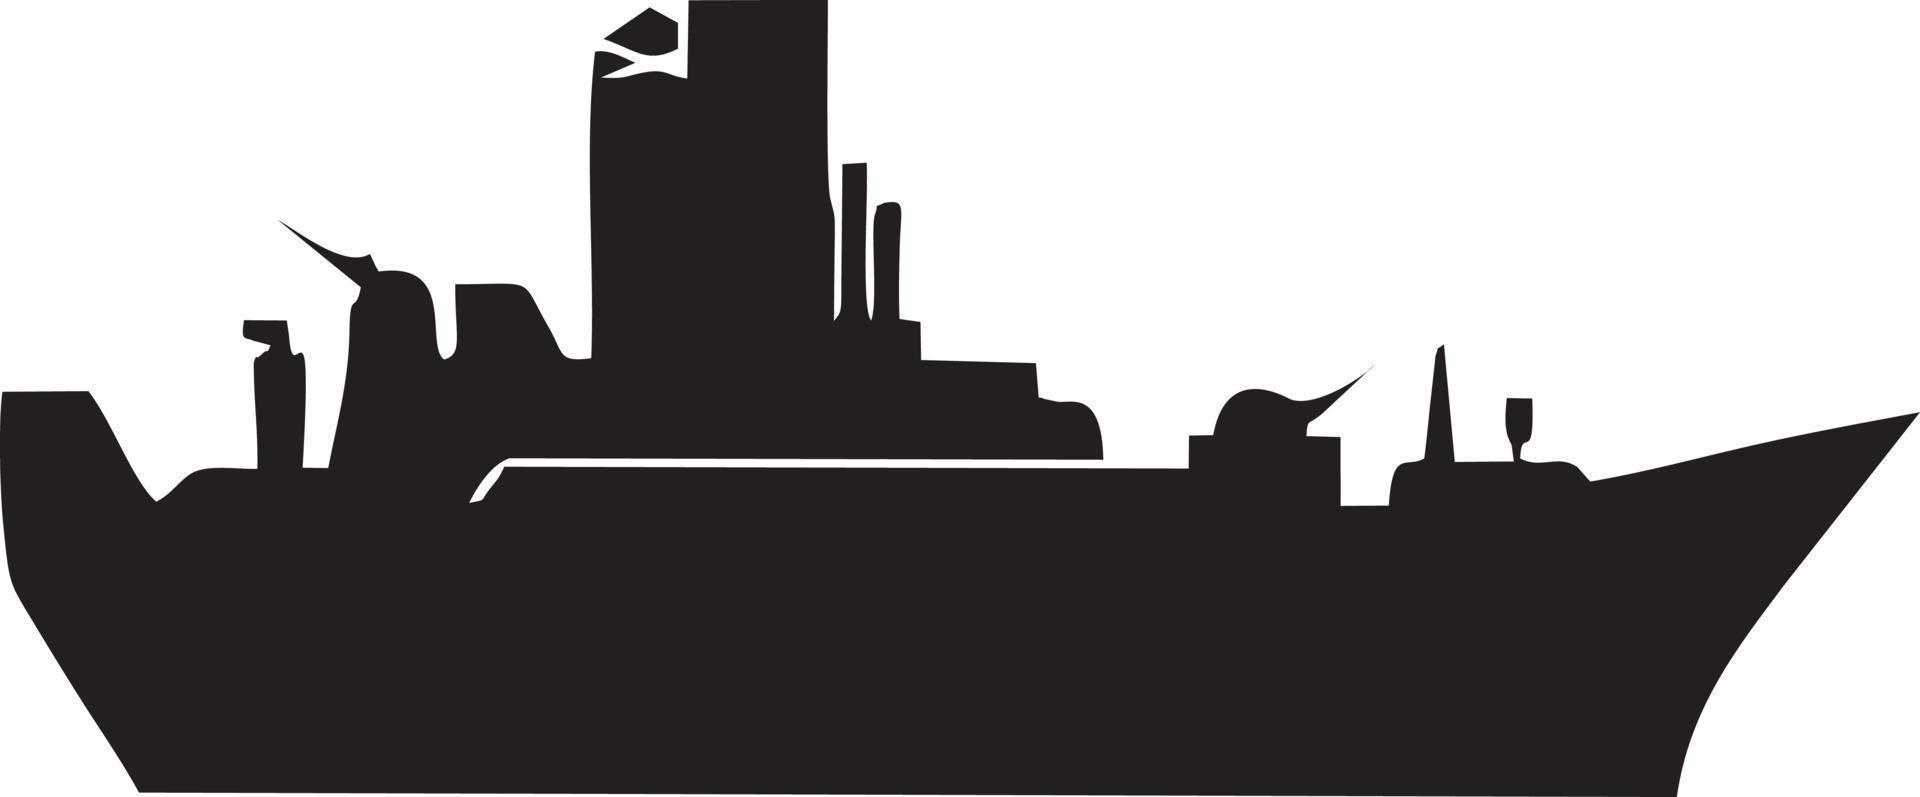 Boot Symbol Symbol Design Vektor Bild. Illustration von das Schiff Boot Transport Design Bild. eps 10.